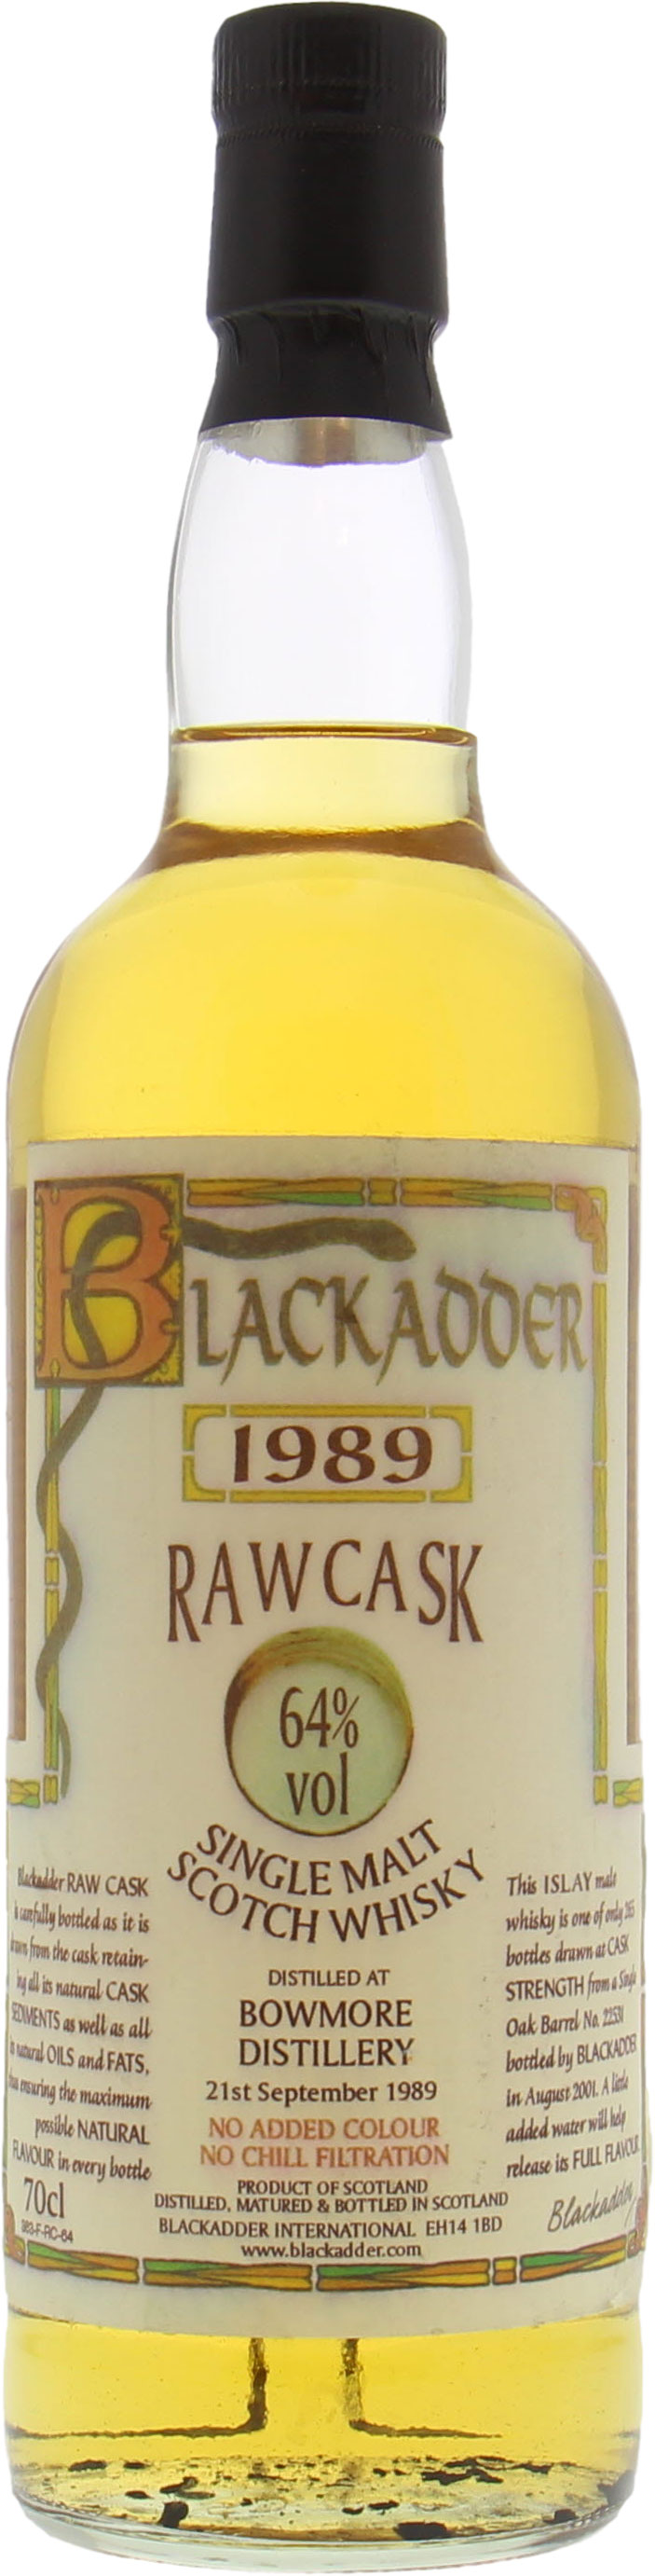 Bowmore - 11 years Old Blackadder Raw Cask 22531 64% 1989 No Original Box